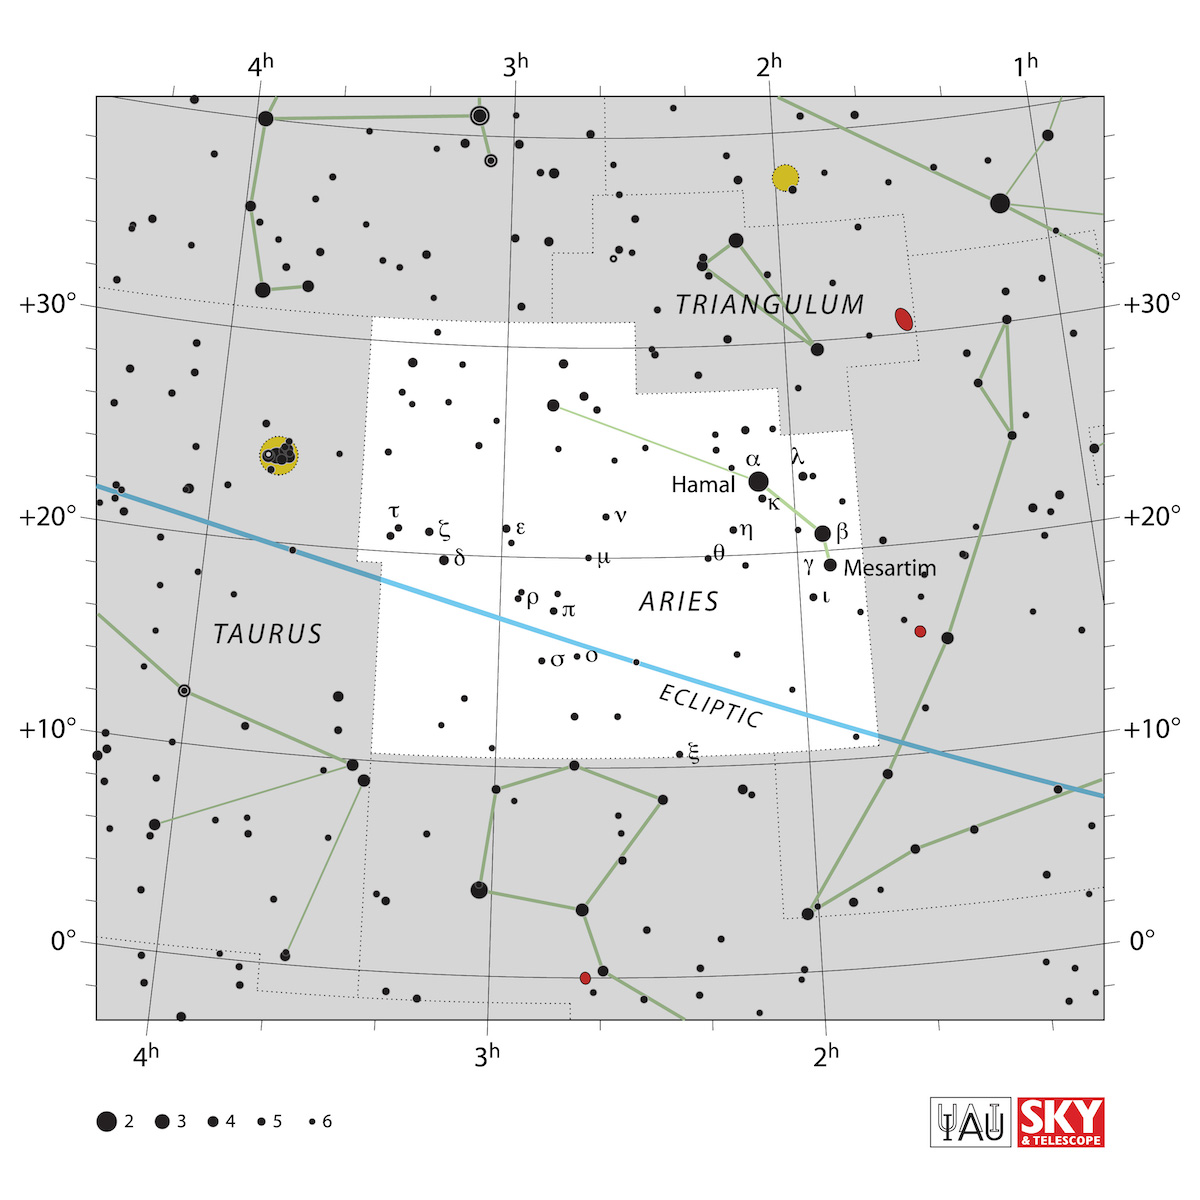 La costellazione dell'Ariete. Credit: IAU and Sky & Telescope (www.iau.org/public/images/detail/ari/)